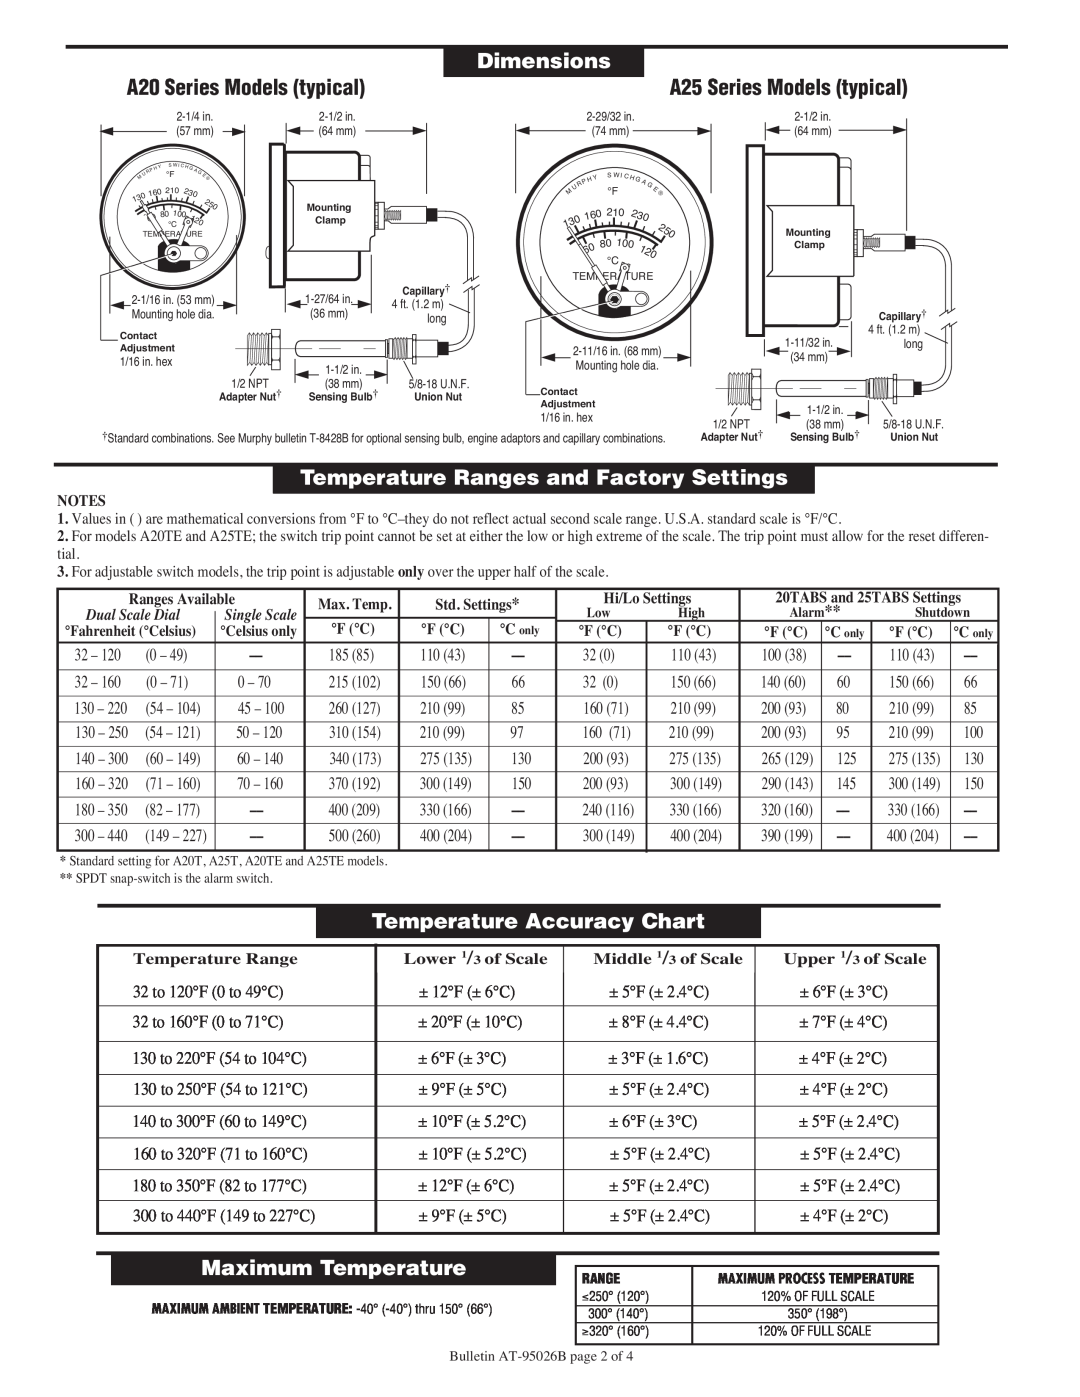 Murphy A25 Series Dimensions, Temperature Ranges and Factory Settings, Temperature Accuracy Chart, Maximum Temperature 